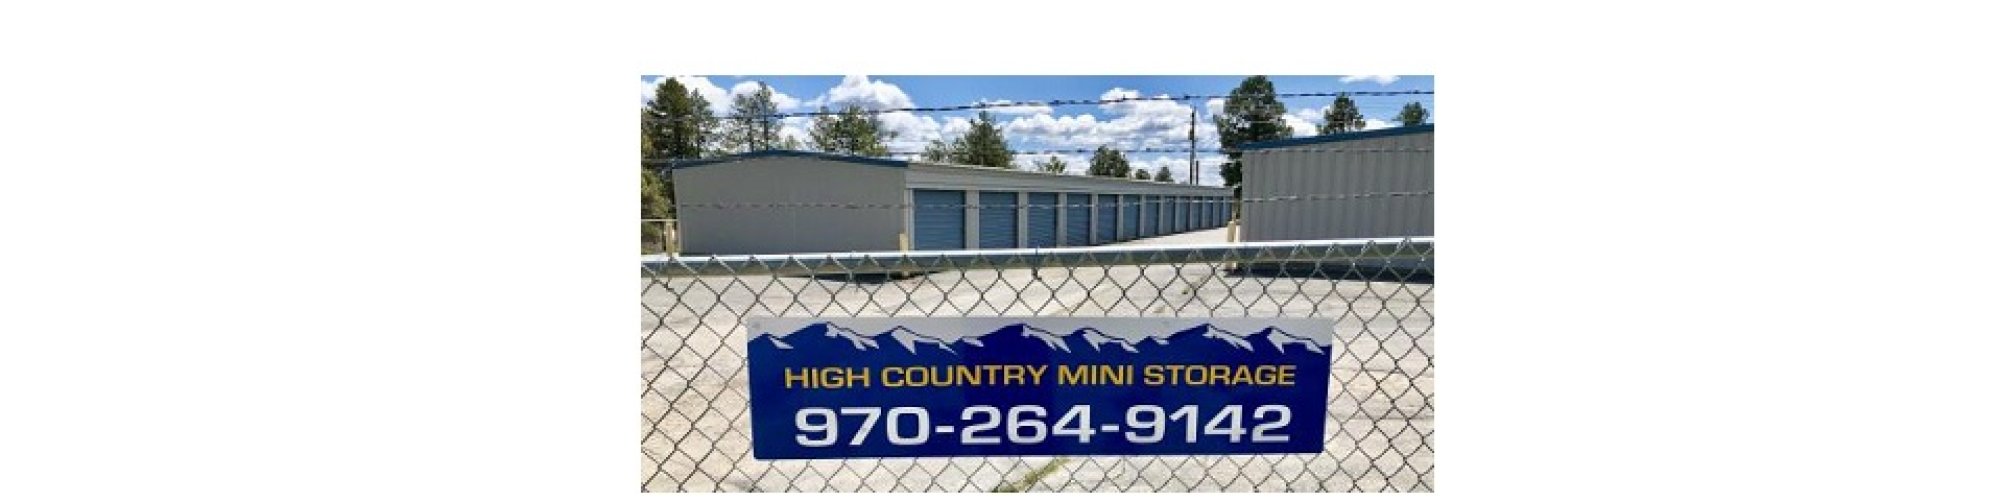 High Country Mini Storage